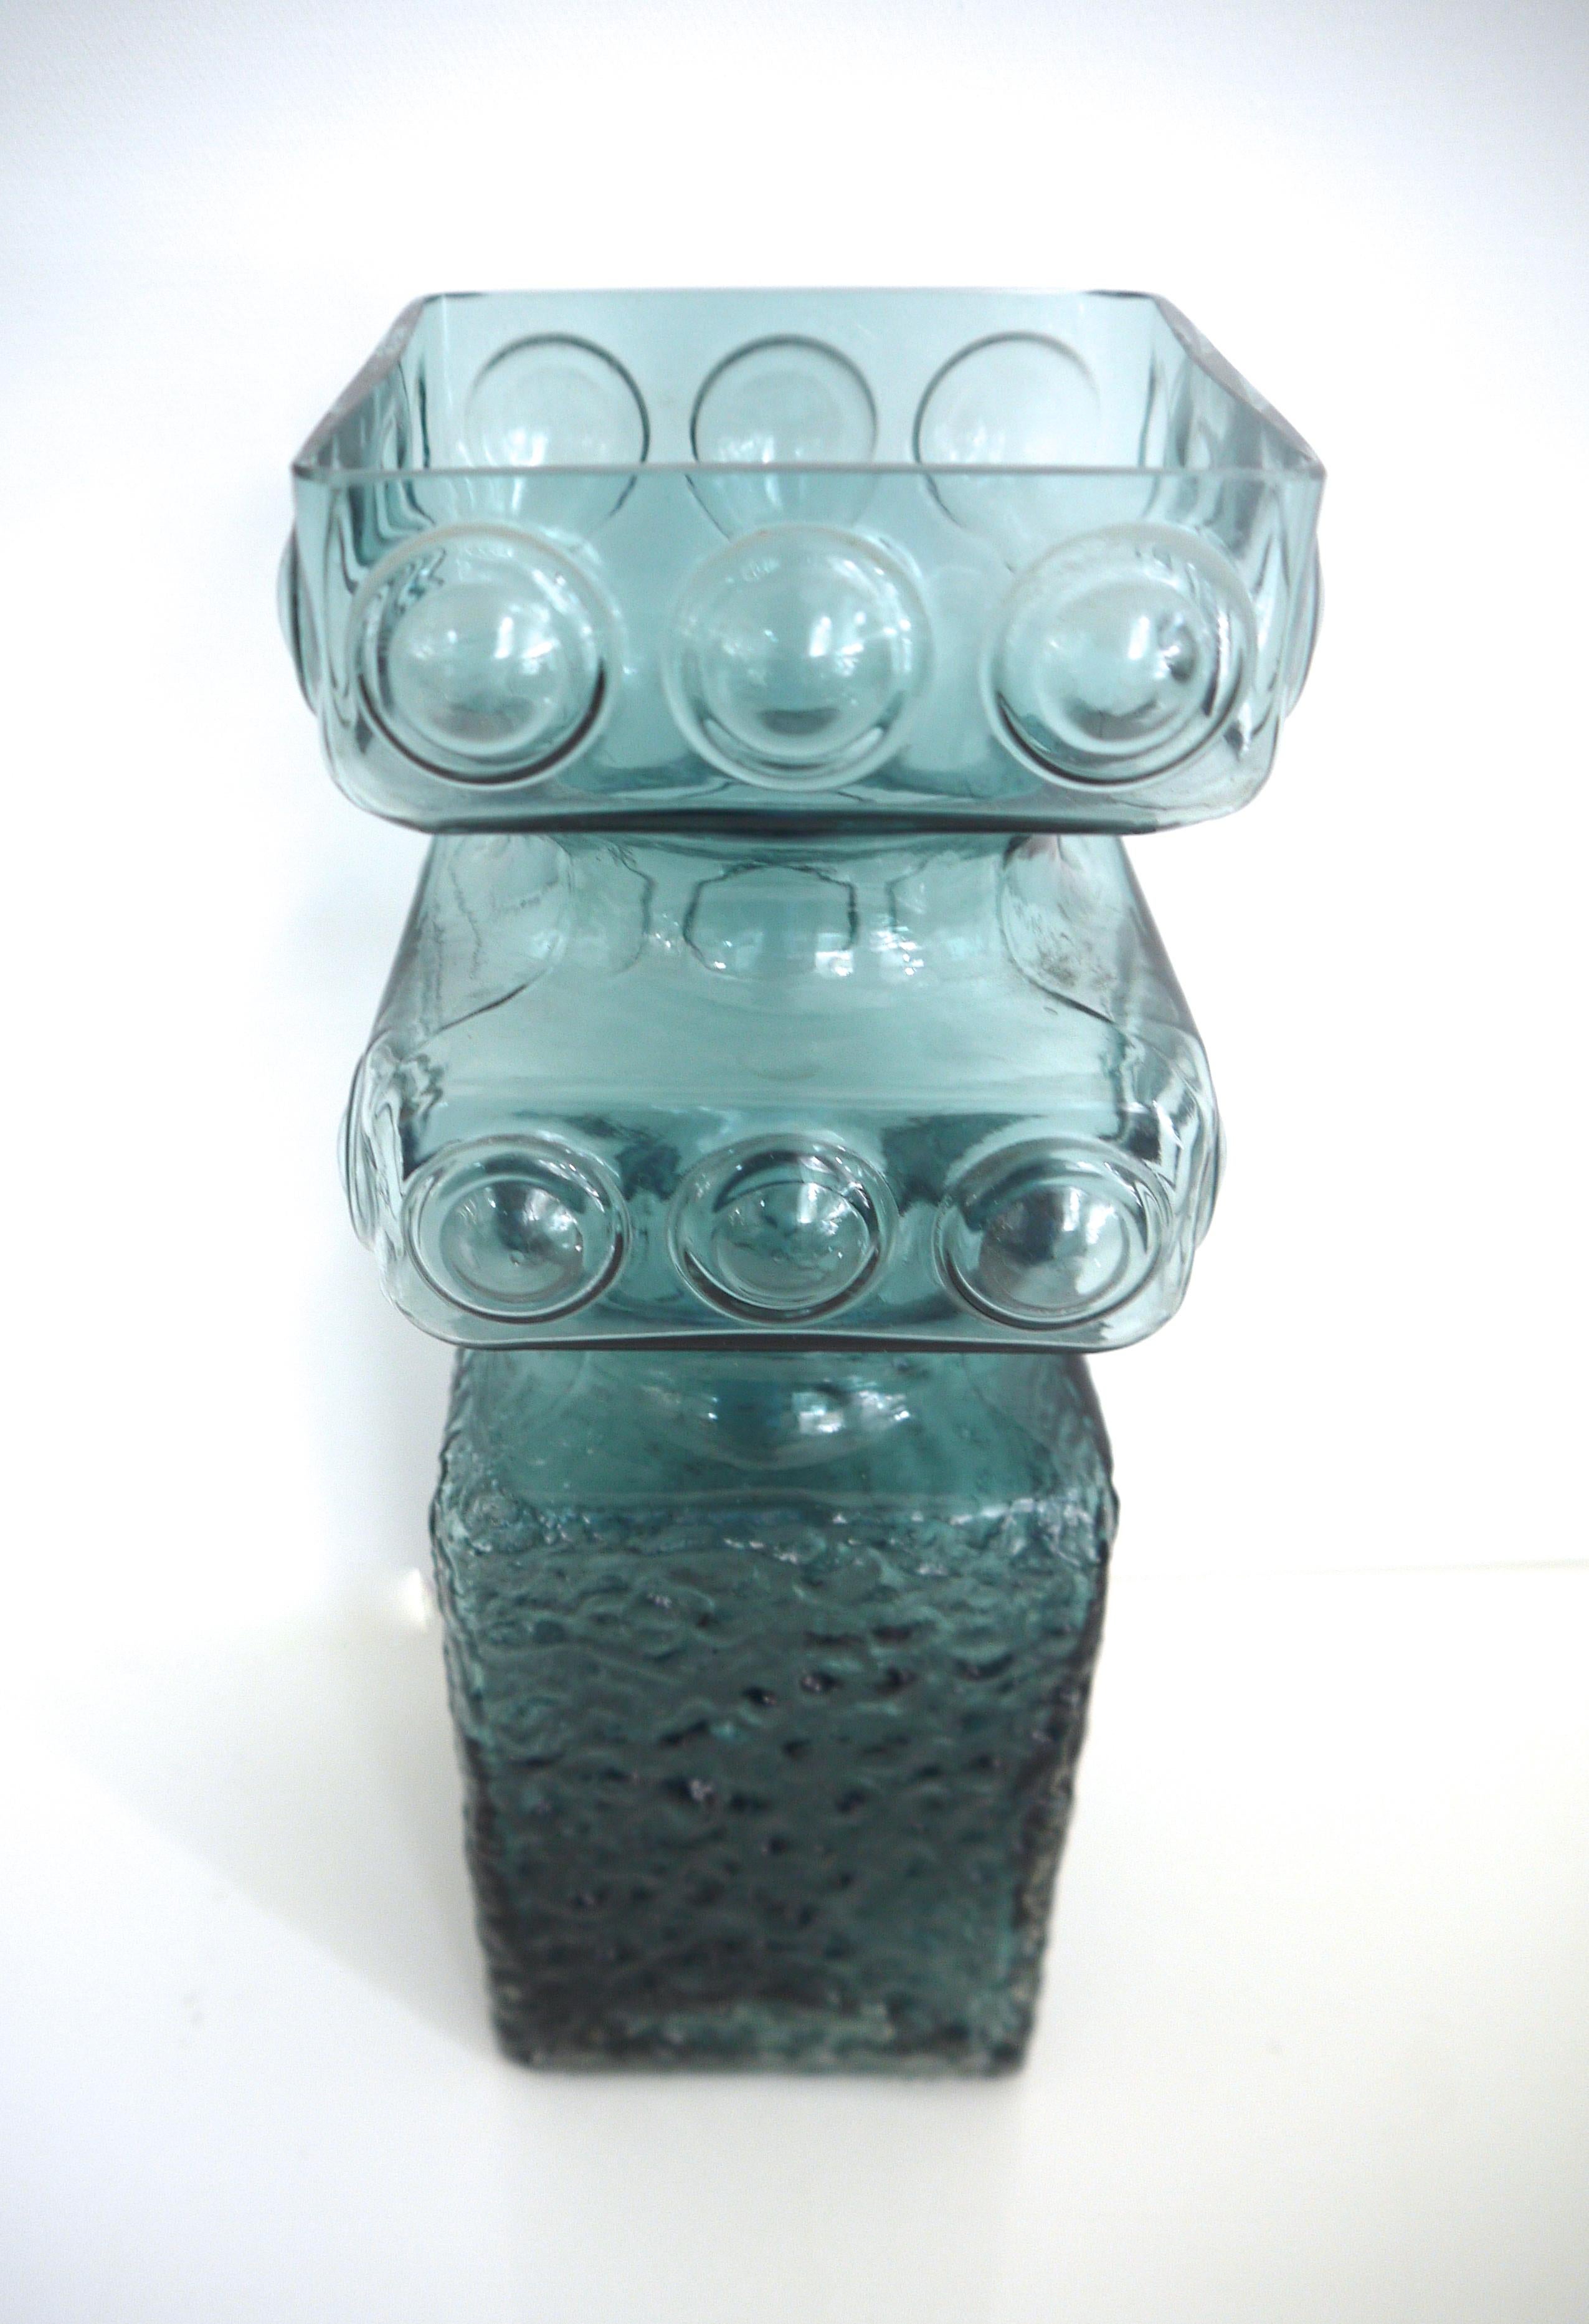 Scandinavian Modern Kehra glass vase by Tamara Aladin Riihimaki (Finland 1950s).

The Riihimaki factory started manufacturing windows and glass bottles from 1910.

Riihimaki was renamed Riihimaen Lasi Oy in 1937, and Aimo Okkolin began designing